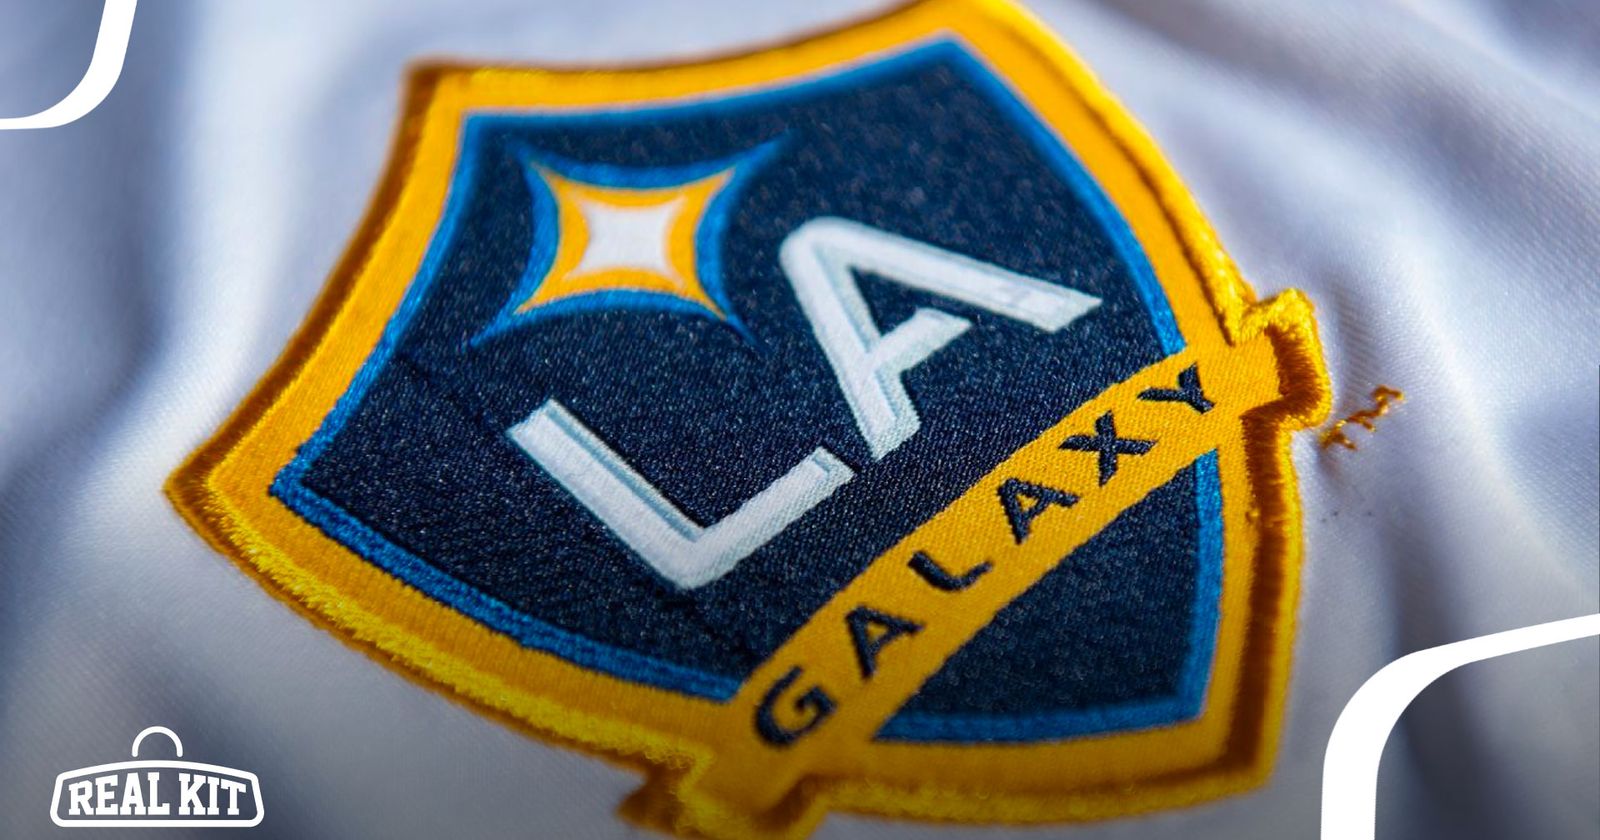 LA Galaxy 2022 Home Kit Released - City of Dreams Kit - Footy Headlines